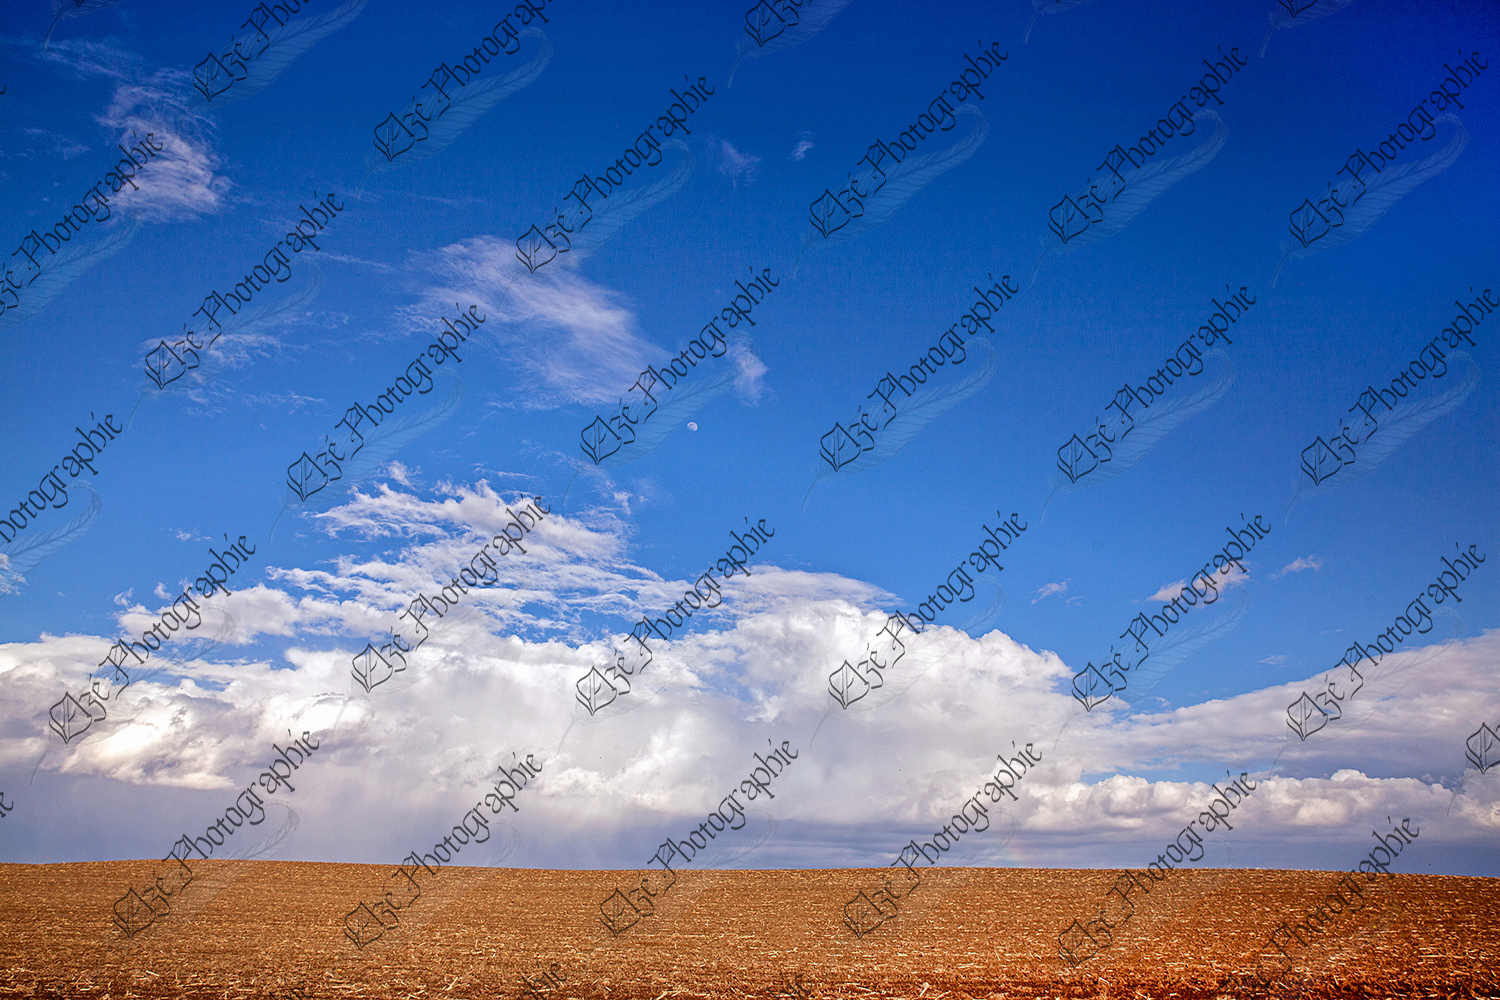 elze_photo_8640_champ_terre_agricole_fall_beautiful_sky